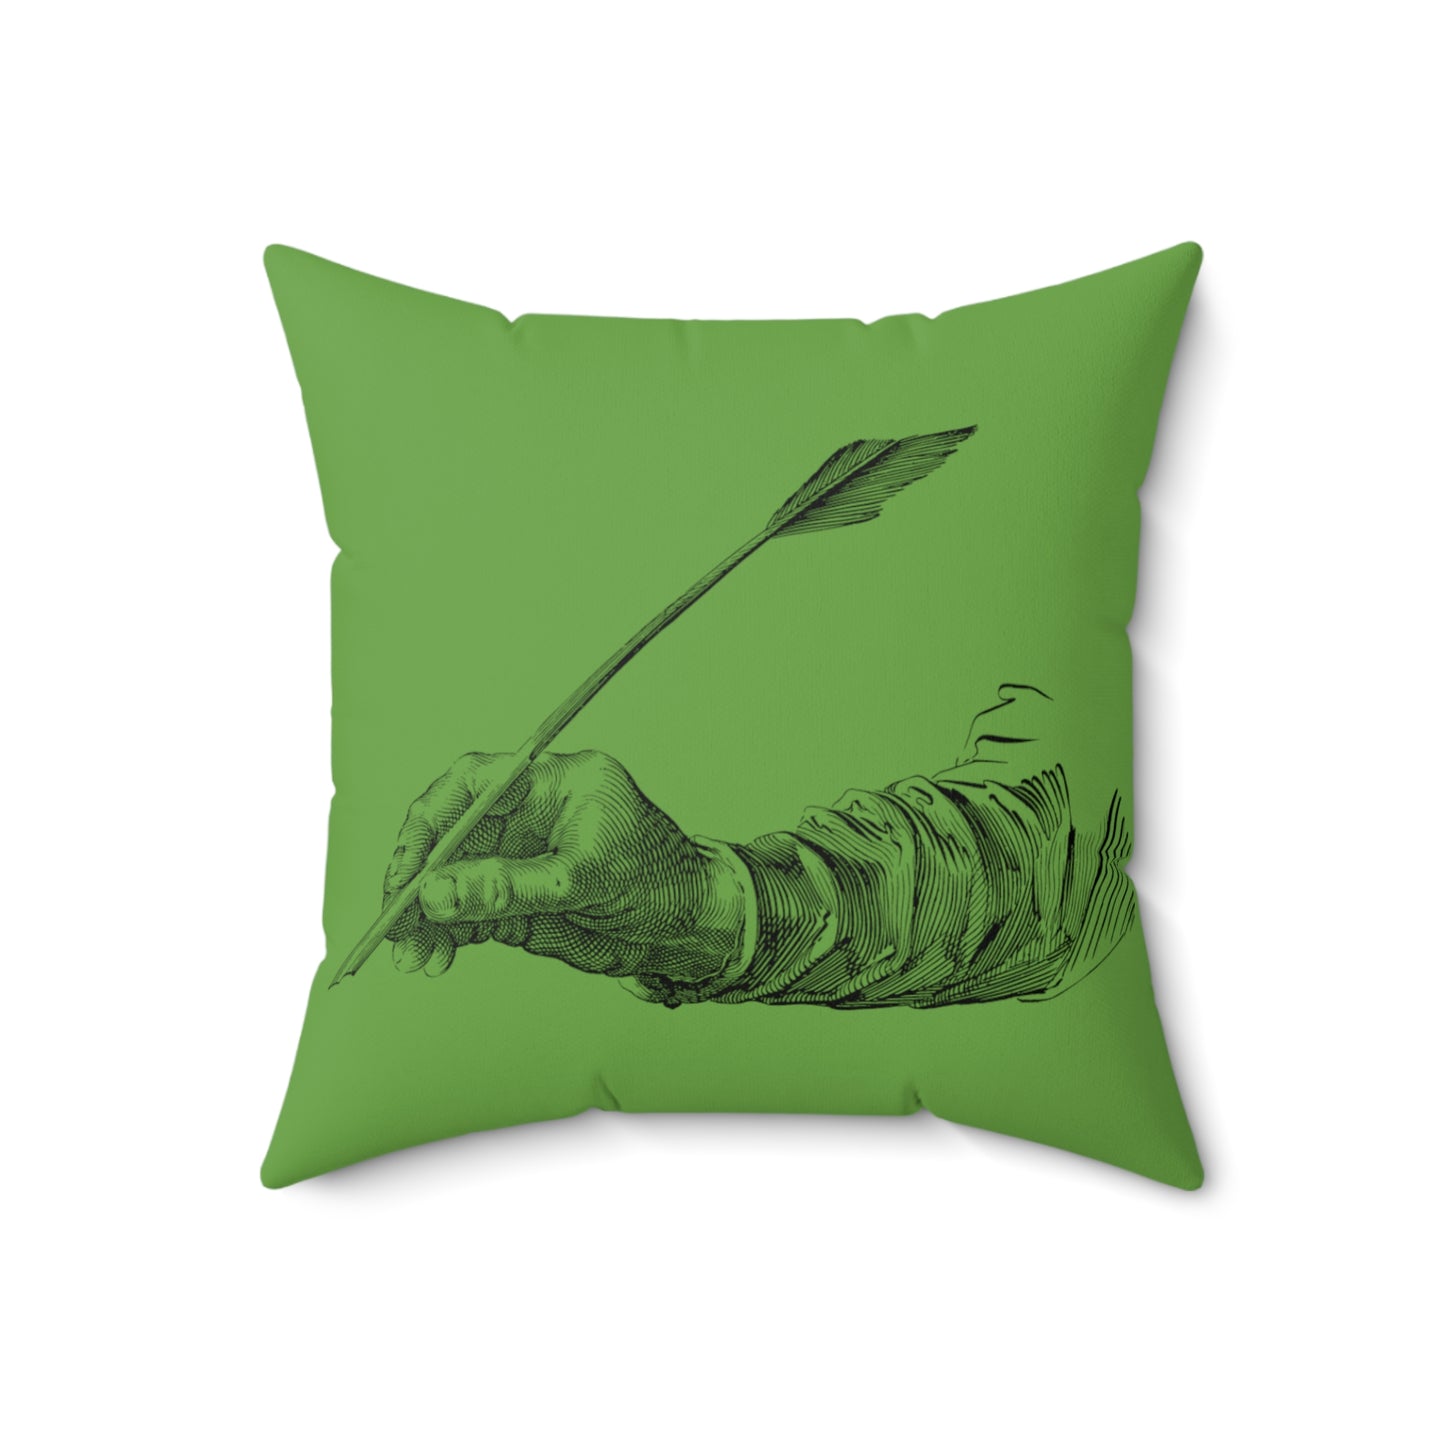 Spun Polyester Square Pillow: Writing Green